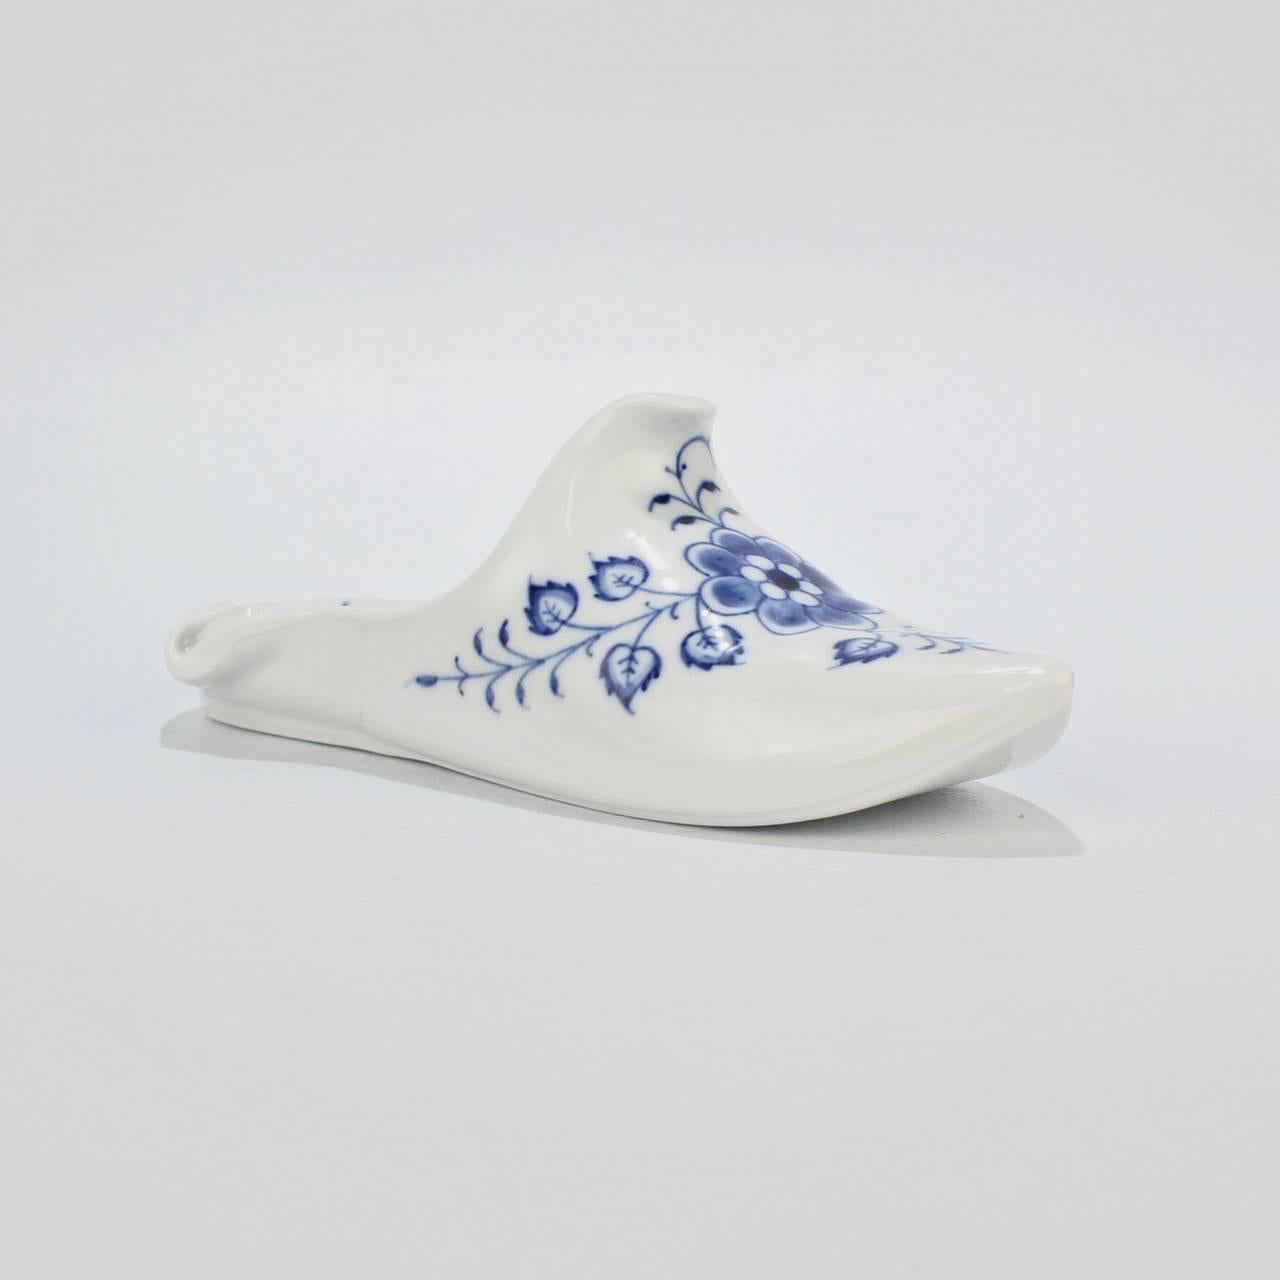 Vintage Meissen Porcelain Blue Onion Pattern Shoe or Slipper Paperweight For Sale 2